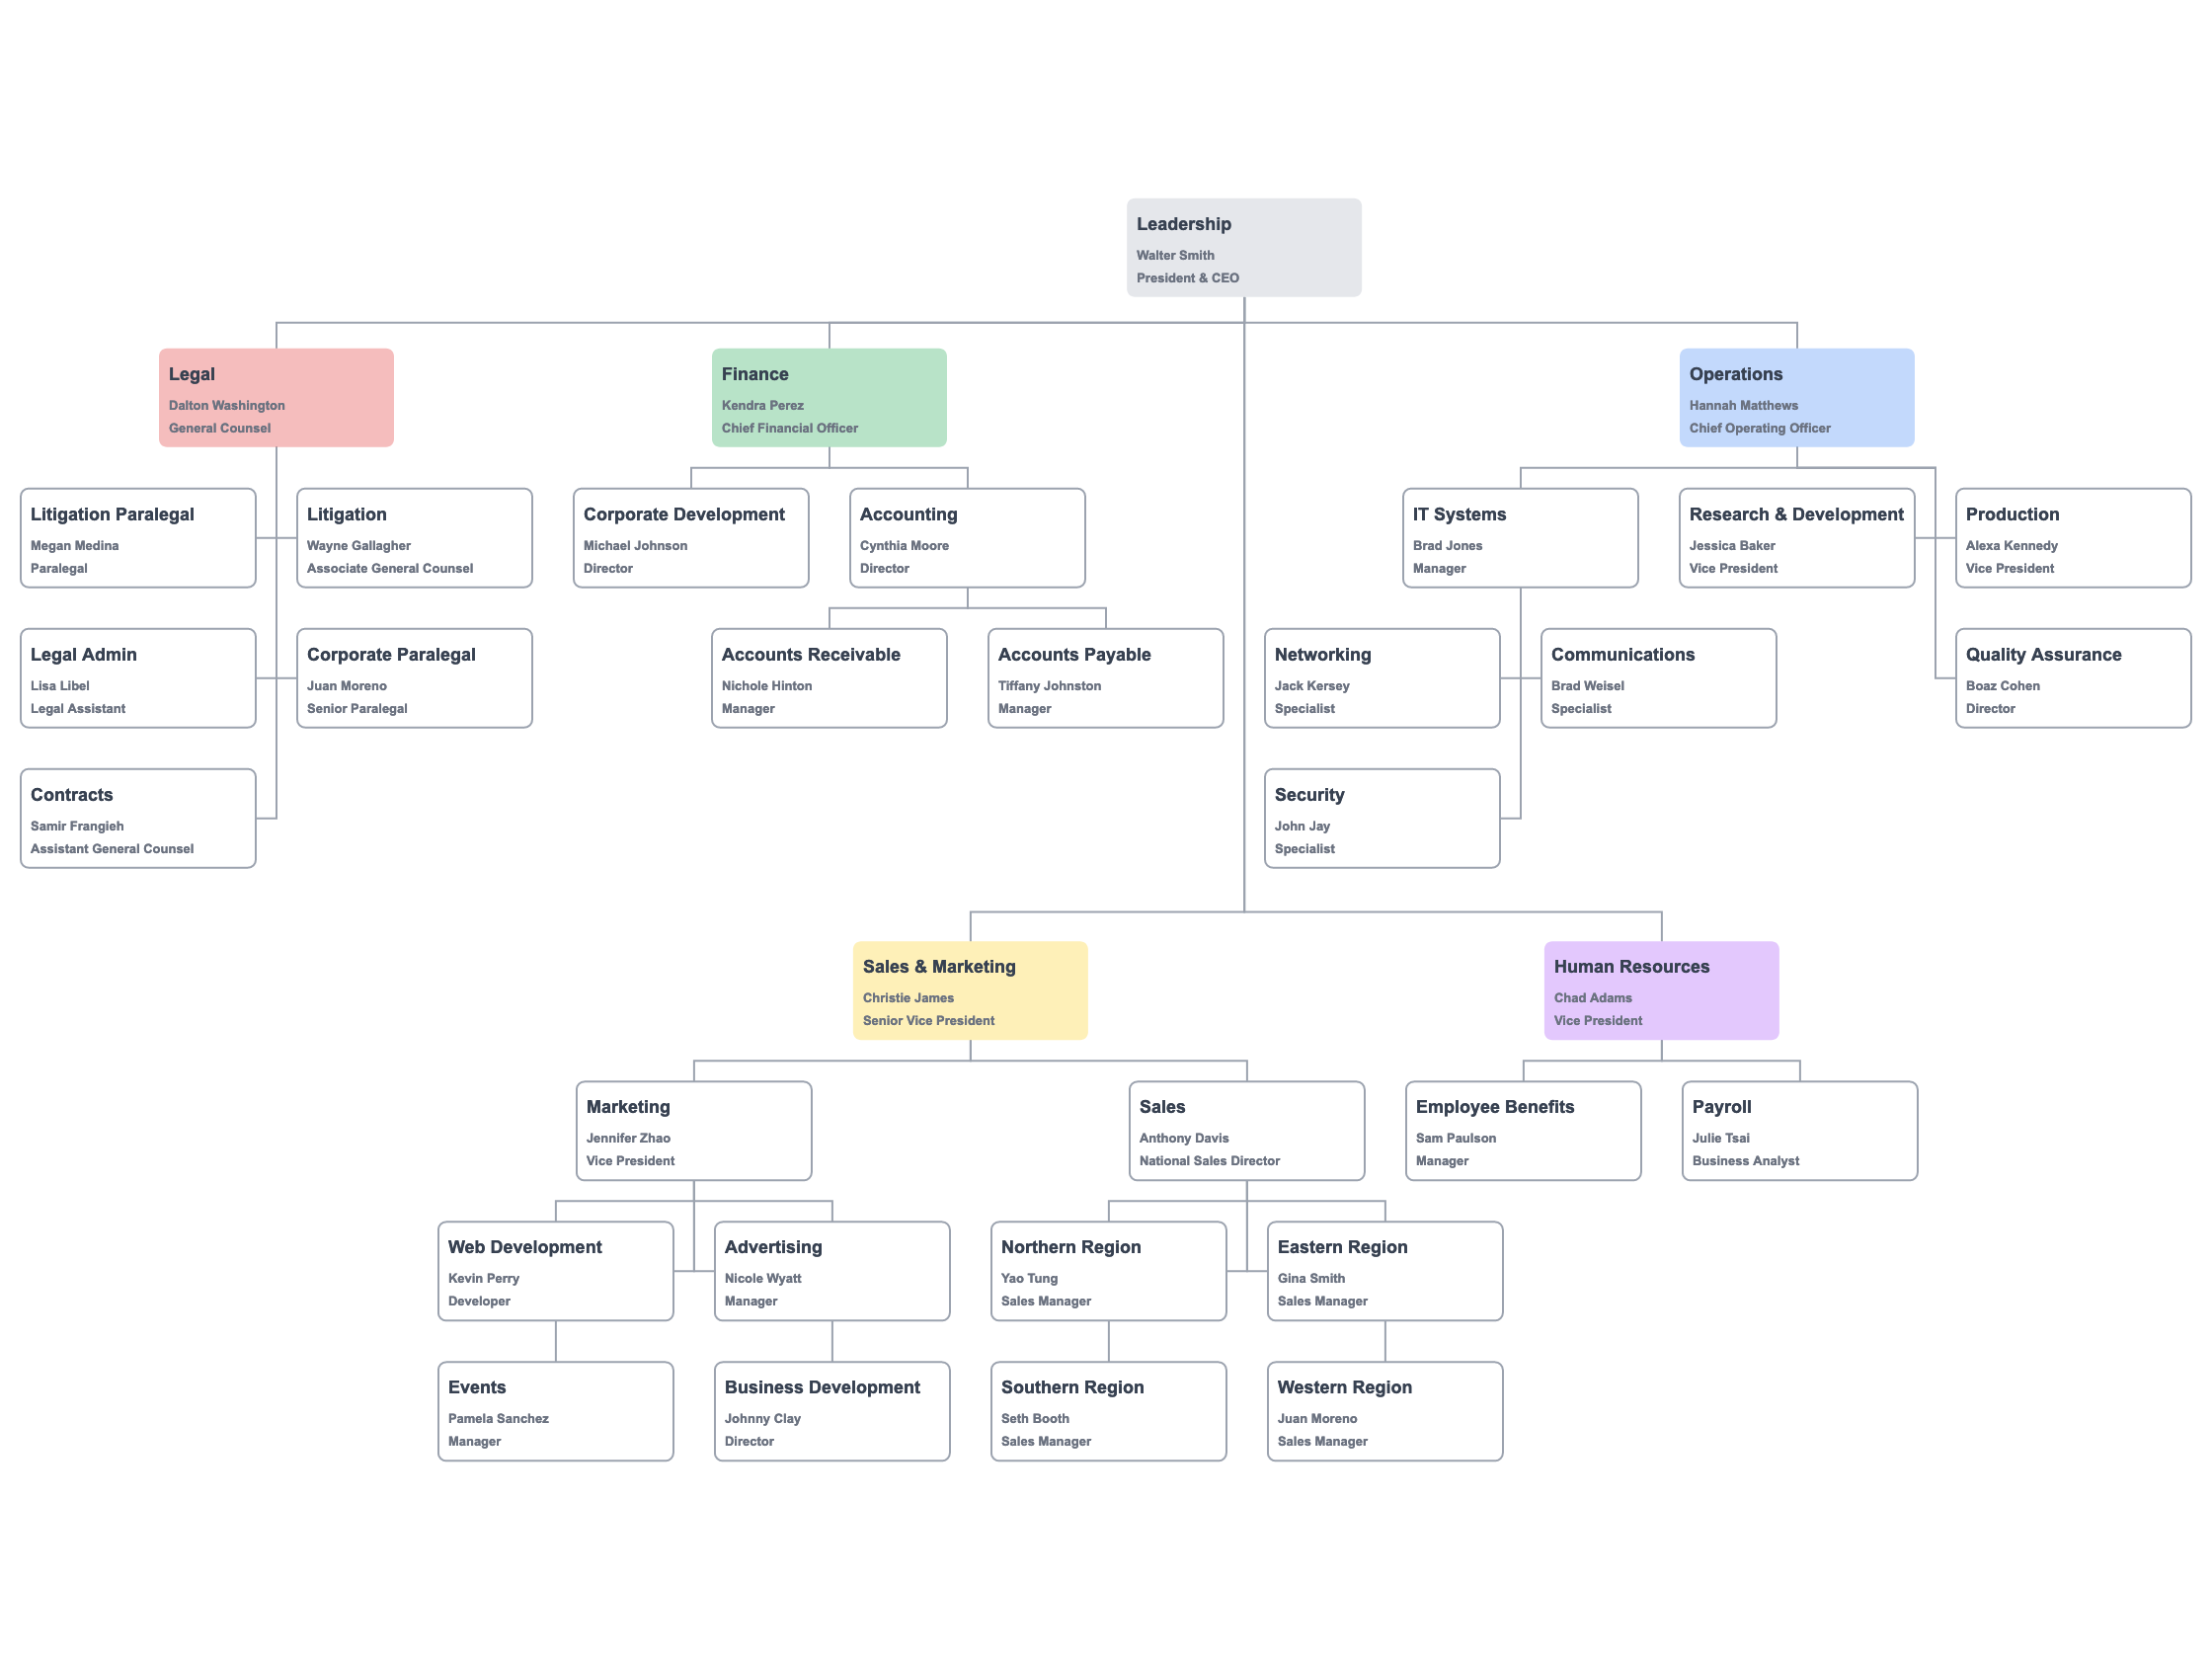 Functional organization chart